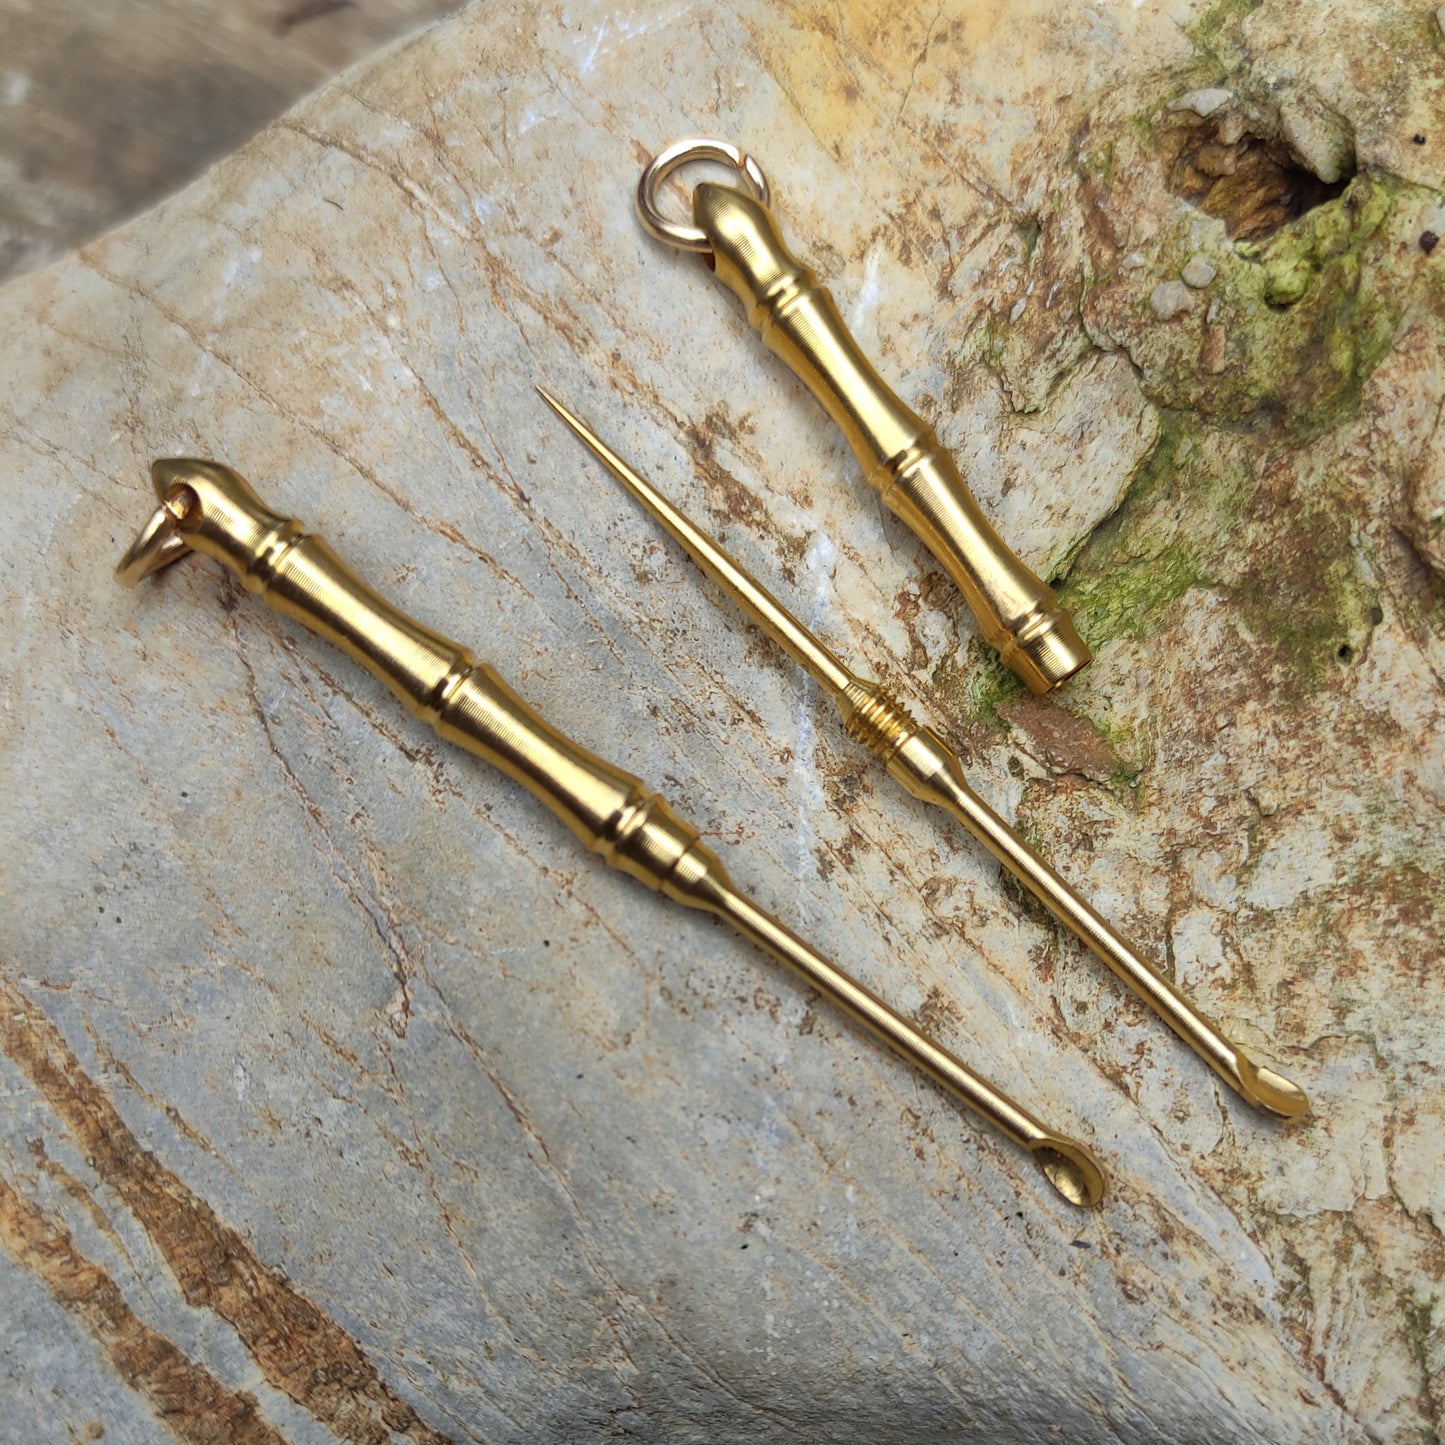 Cute handmade copper wire keychain